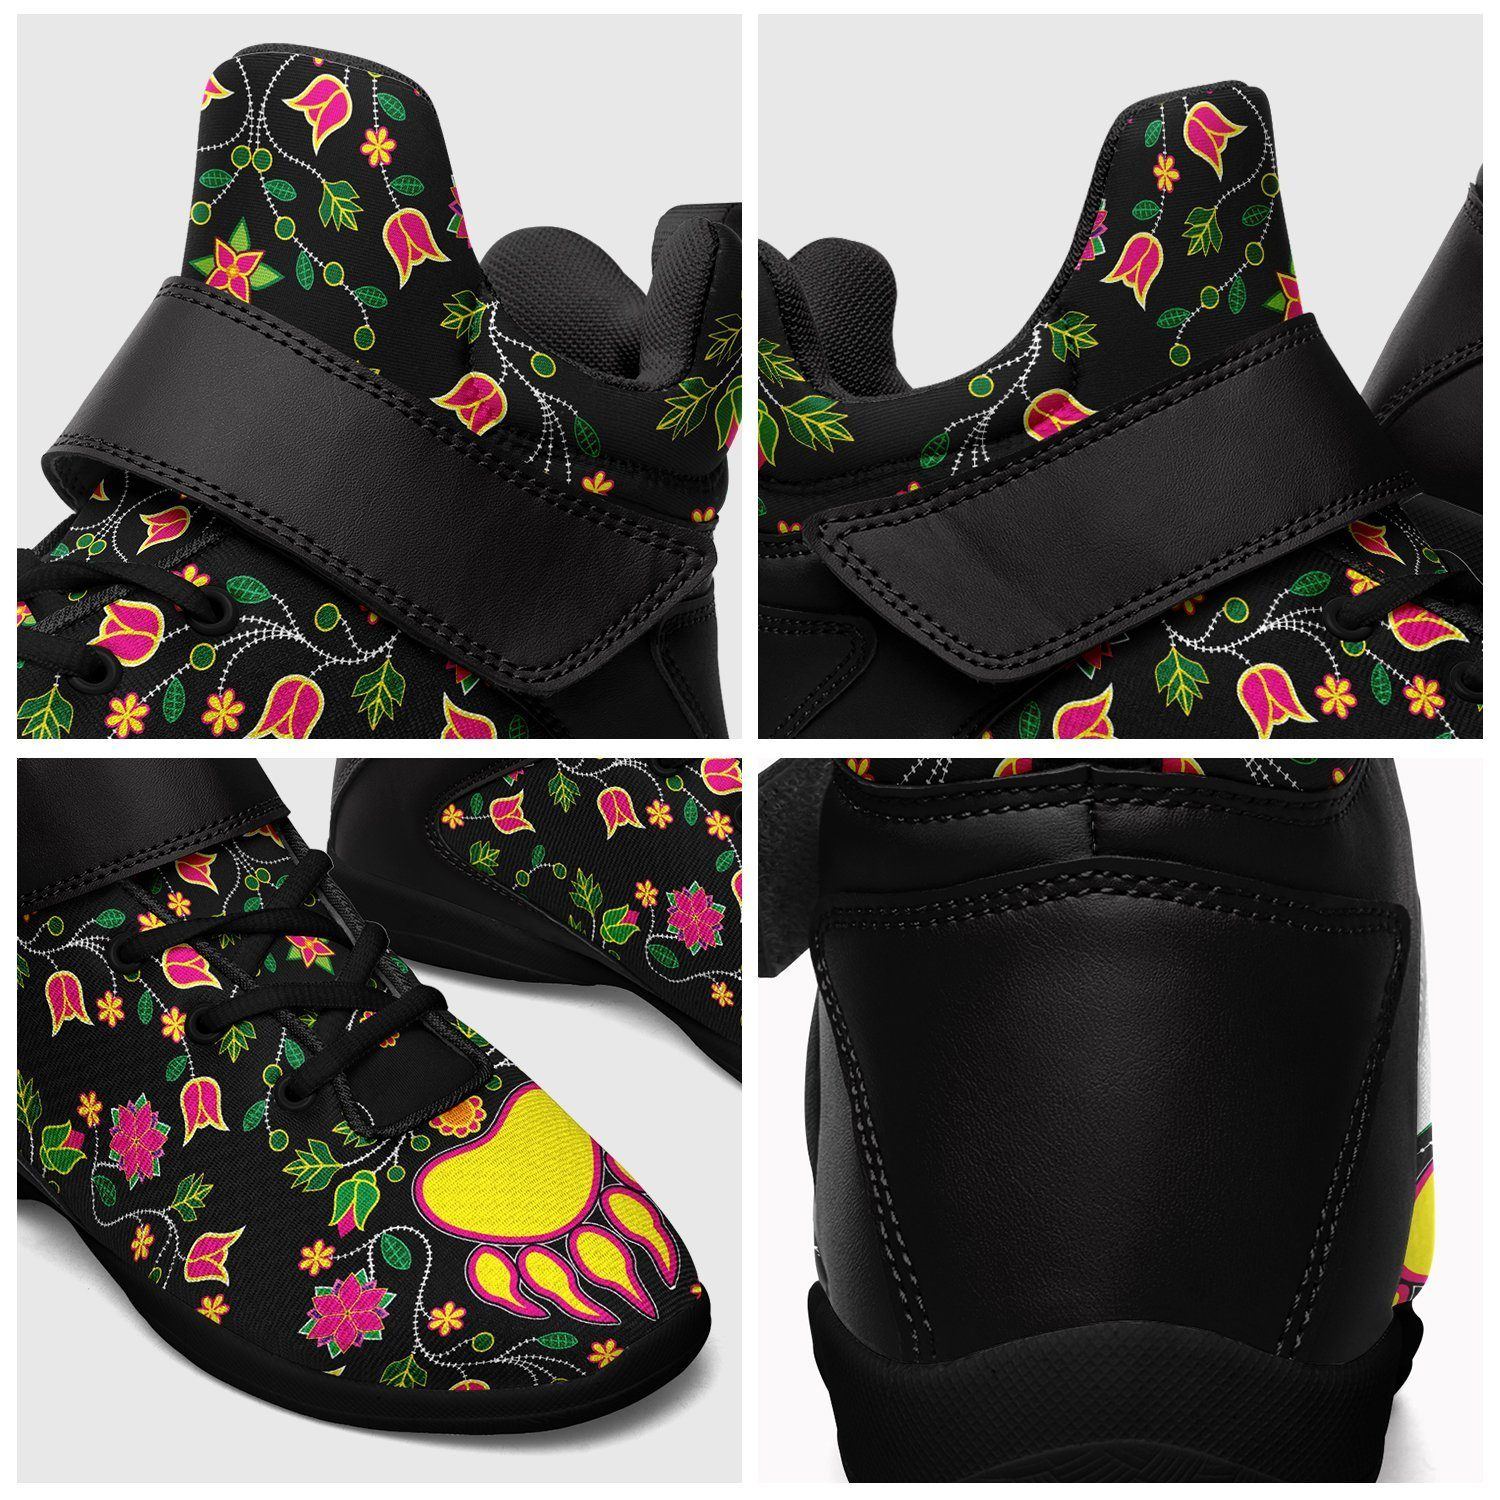 Floral Bearpaw Ipottaa Basketball / Sport High Top Shoes - Black Sole 49 Dzine 